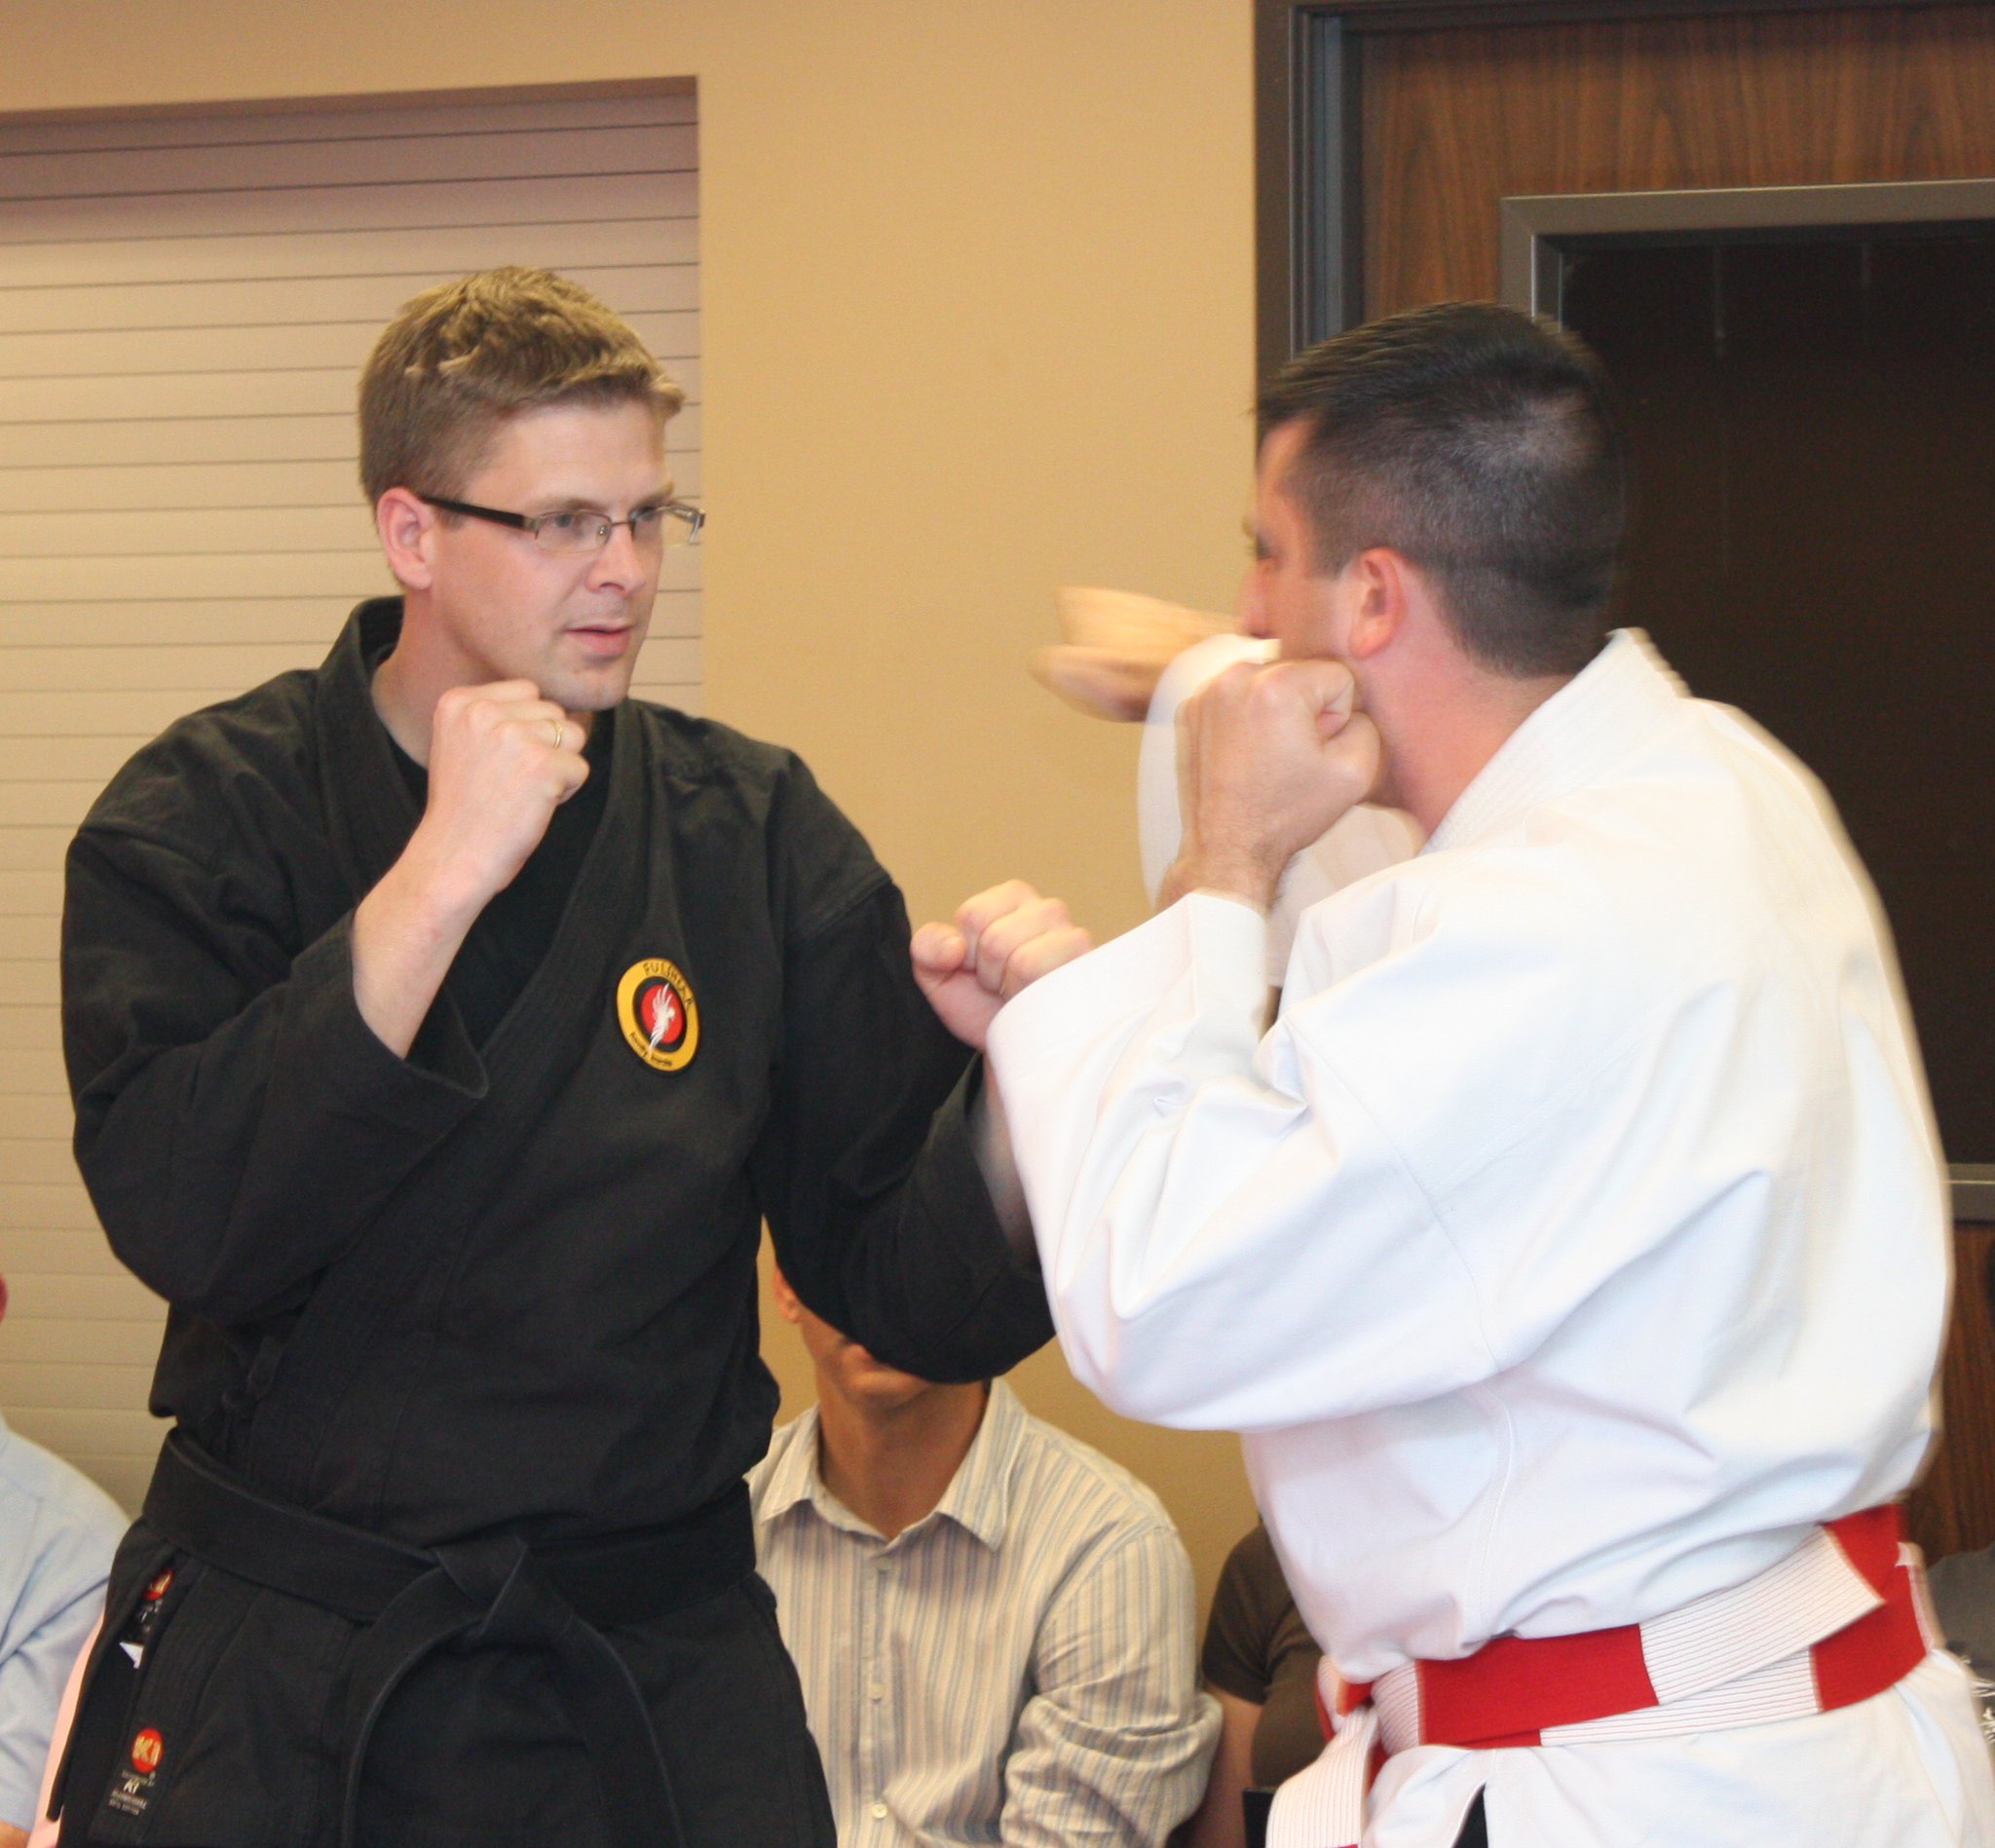 Karate demo with instructor Wade Kirkpatrick